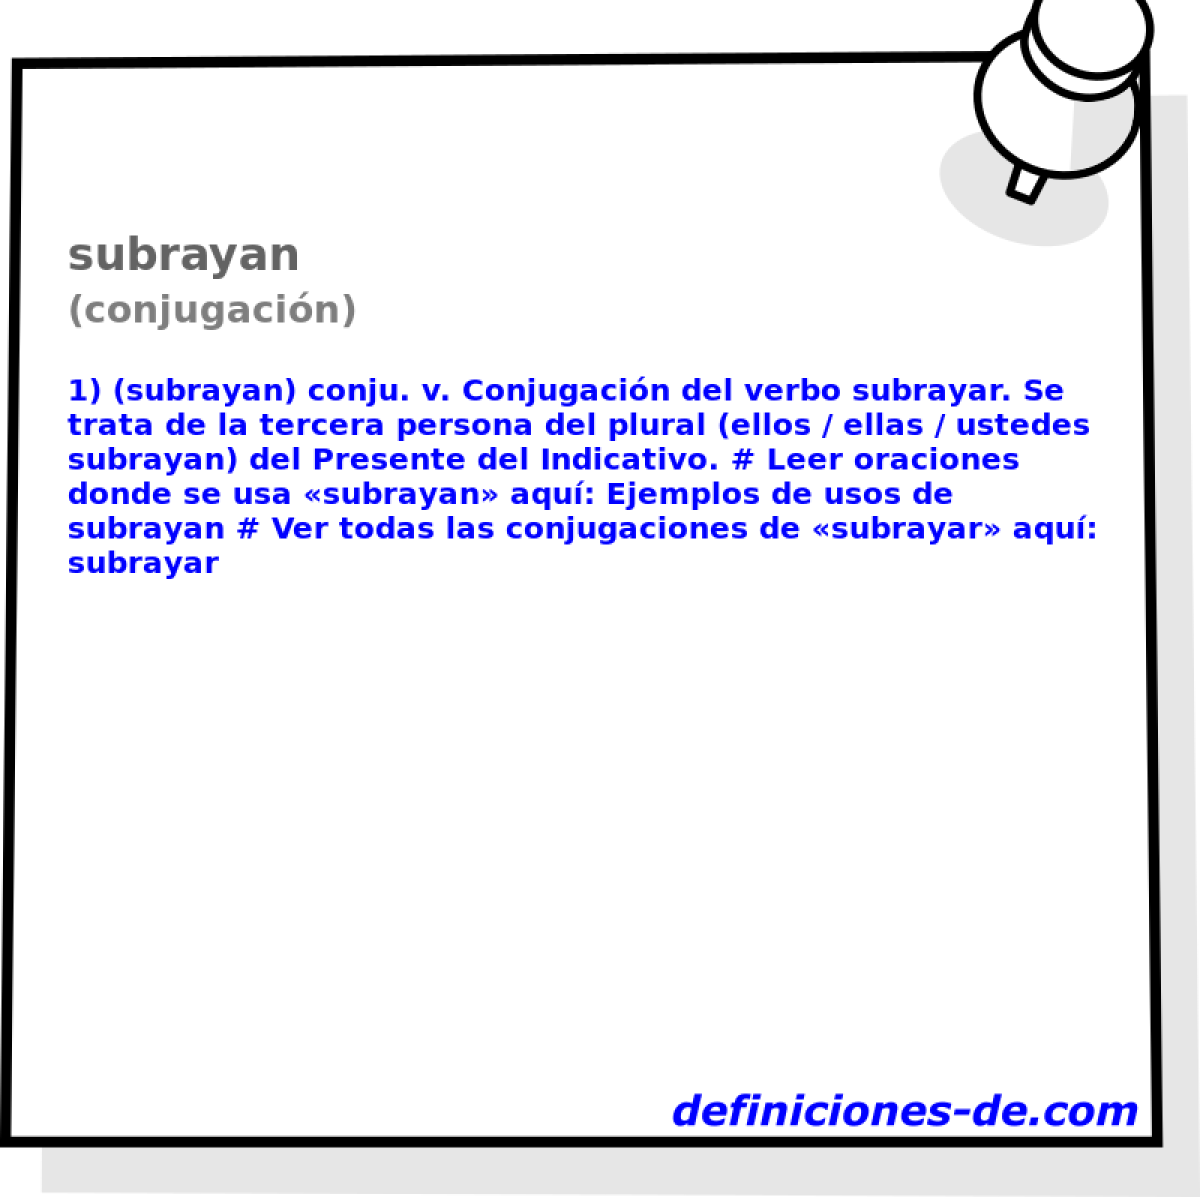 subrayan (conjugacin)